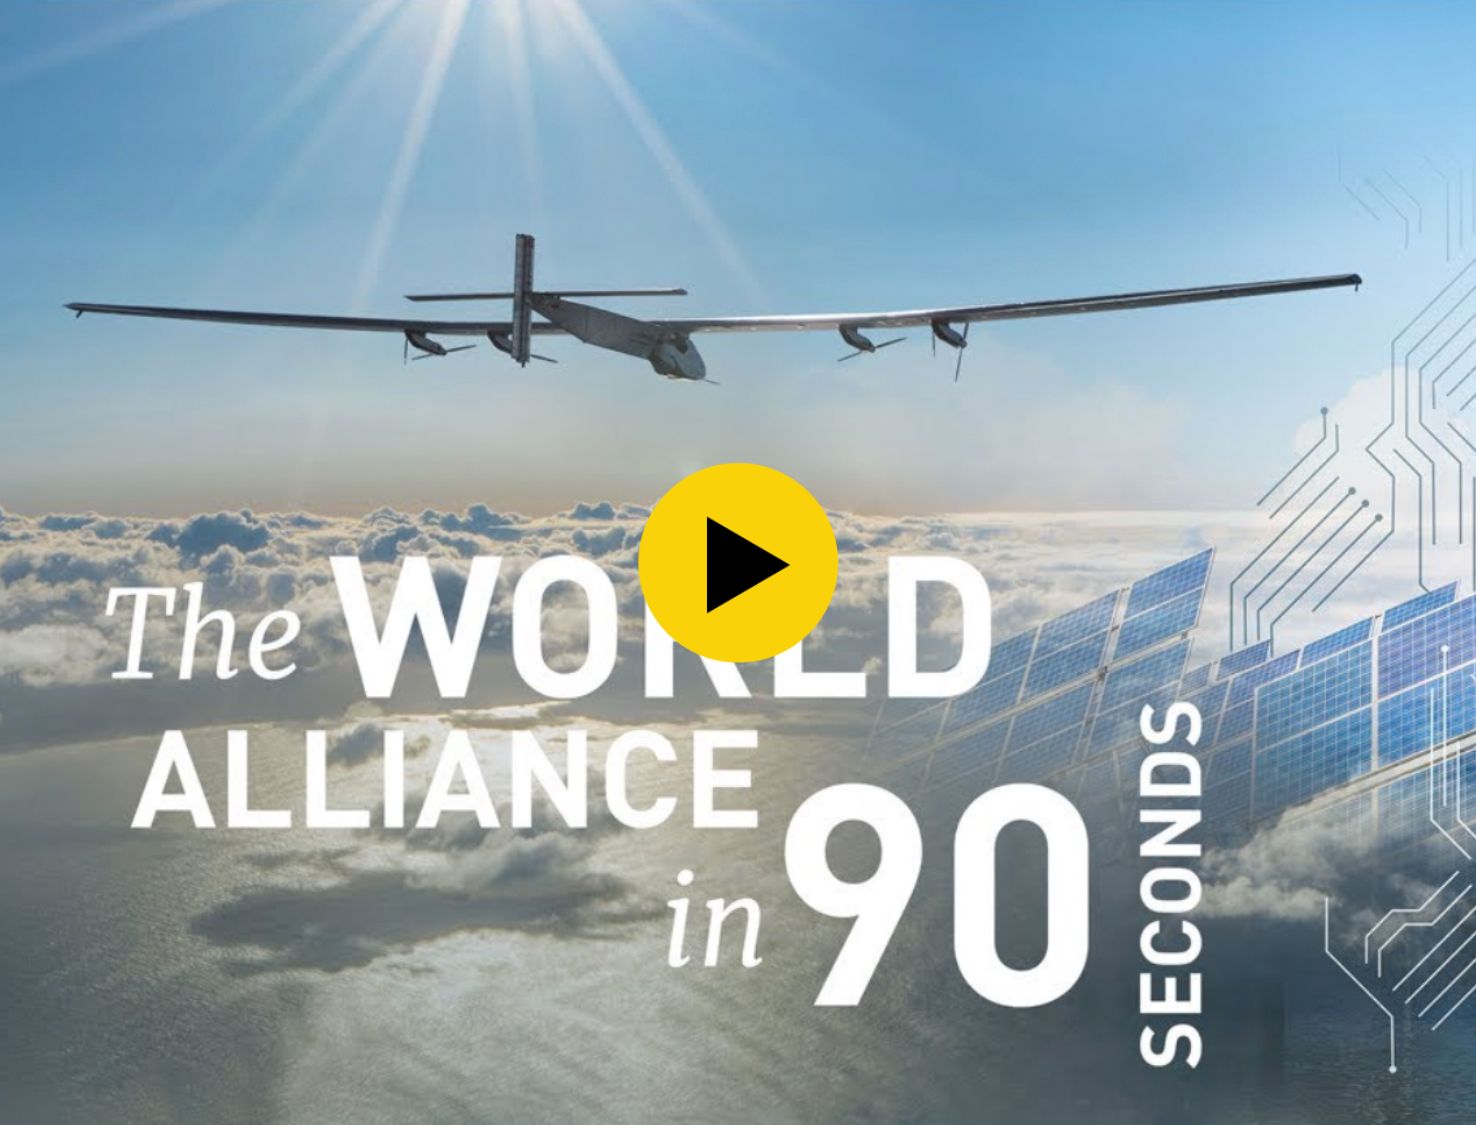 Recticel-Solar-Impulse-The-World-Alliance